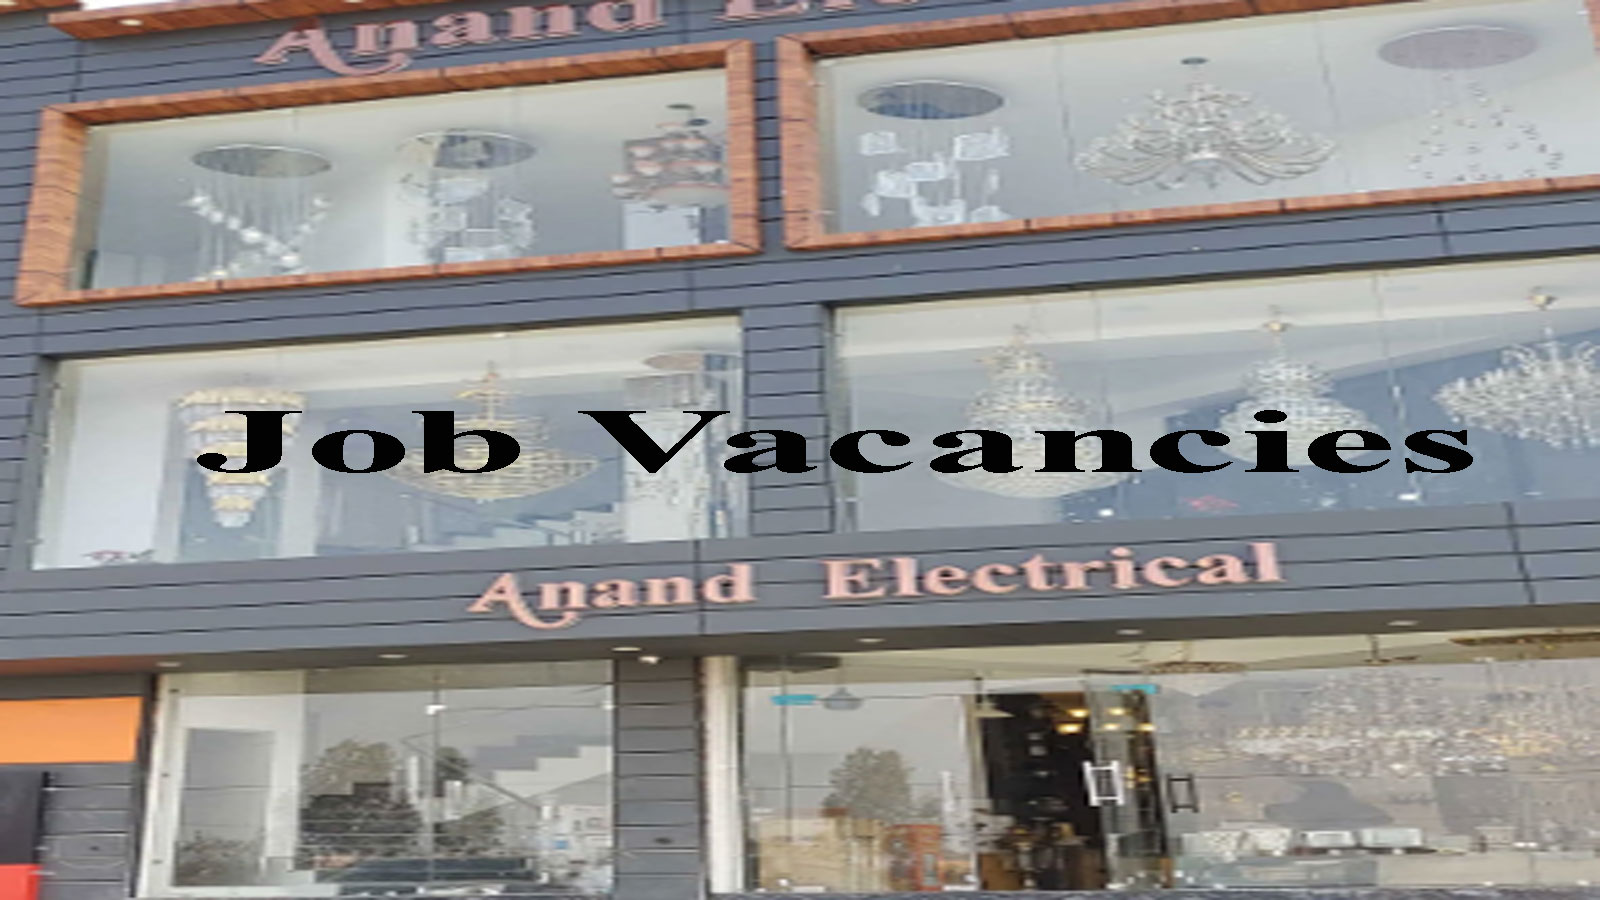 Anand Electricals Jammu Jobs Recruitment